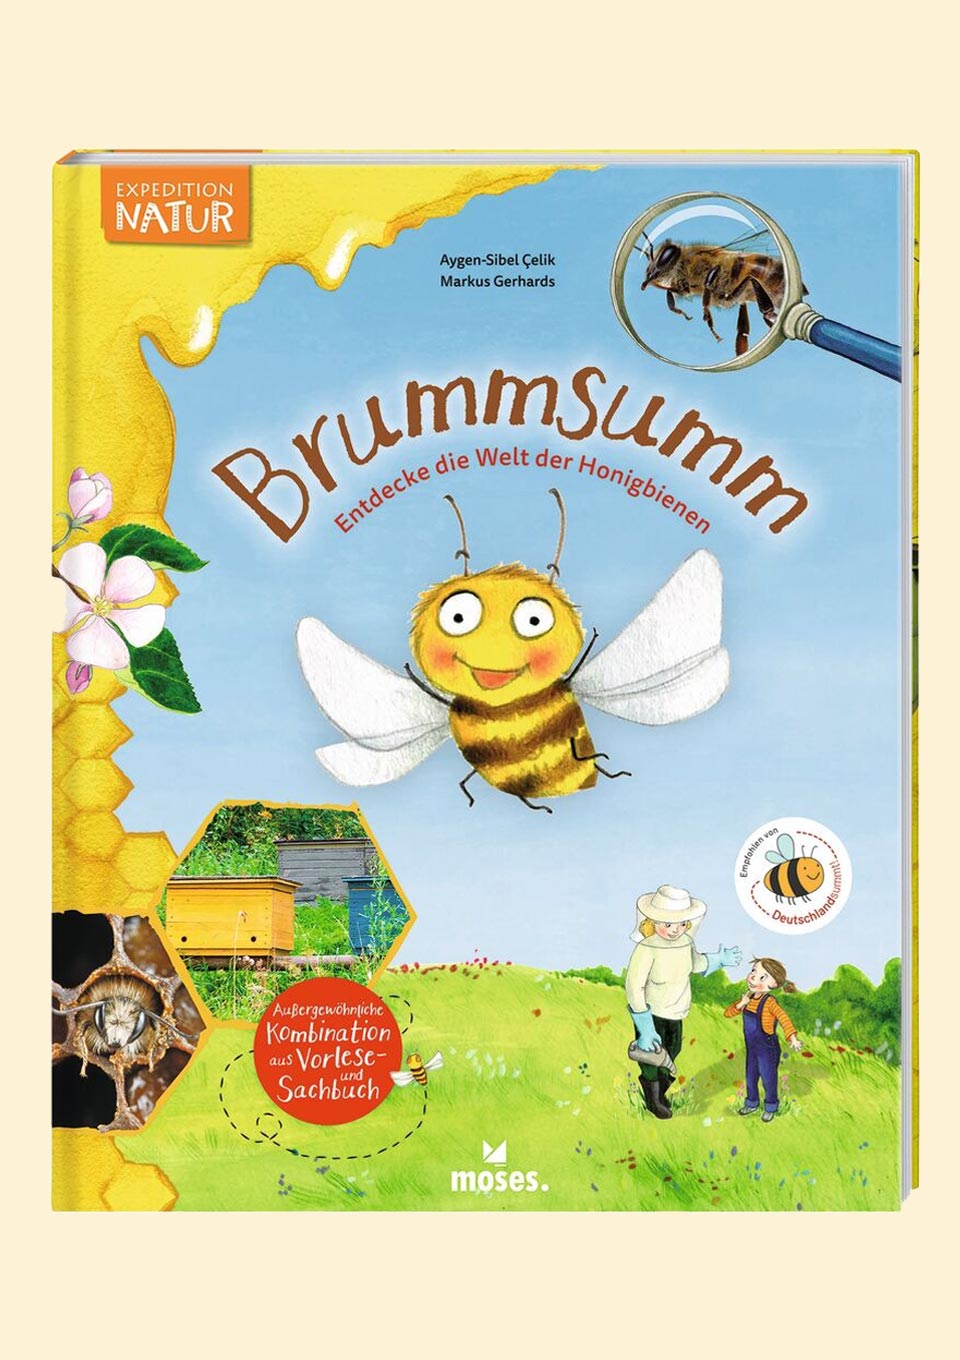 moses. Sach- und Vorlesebuch "Brummsumm" - tiny-boon.com